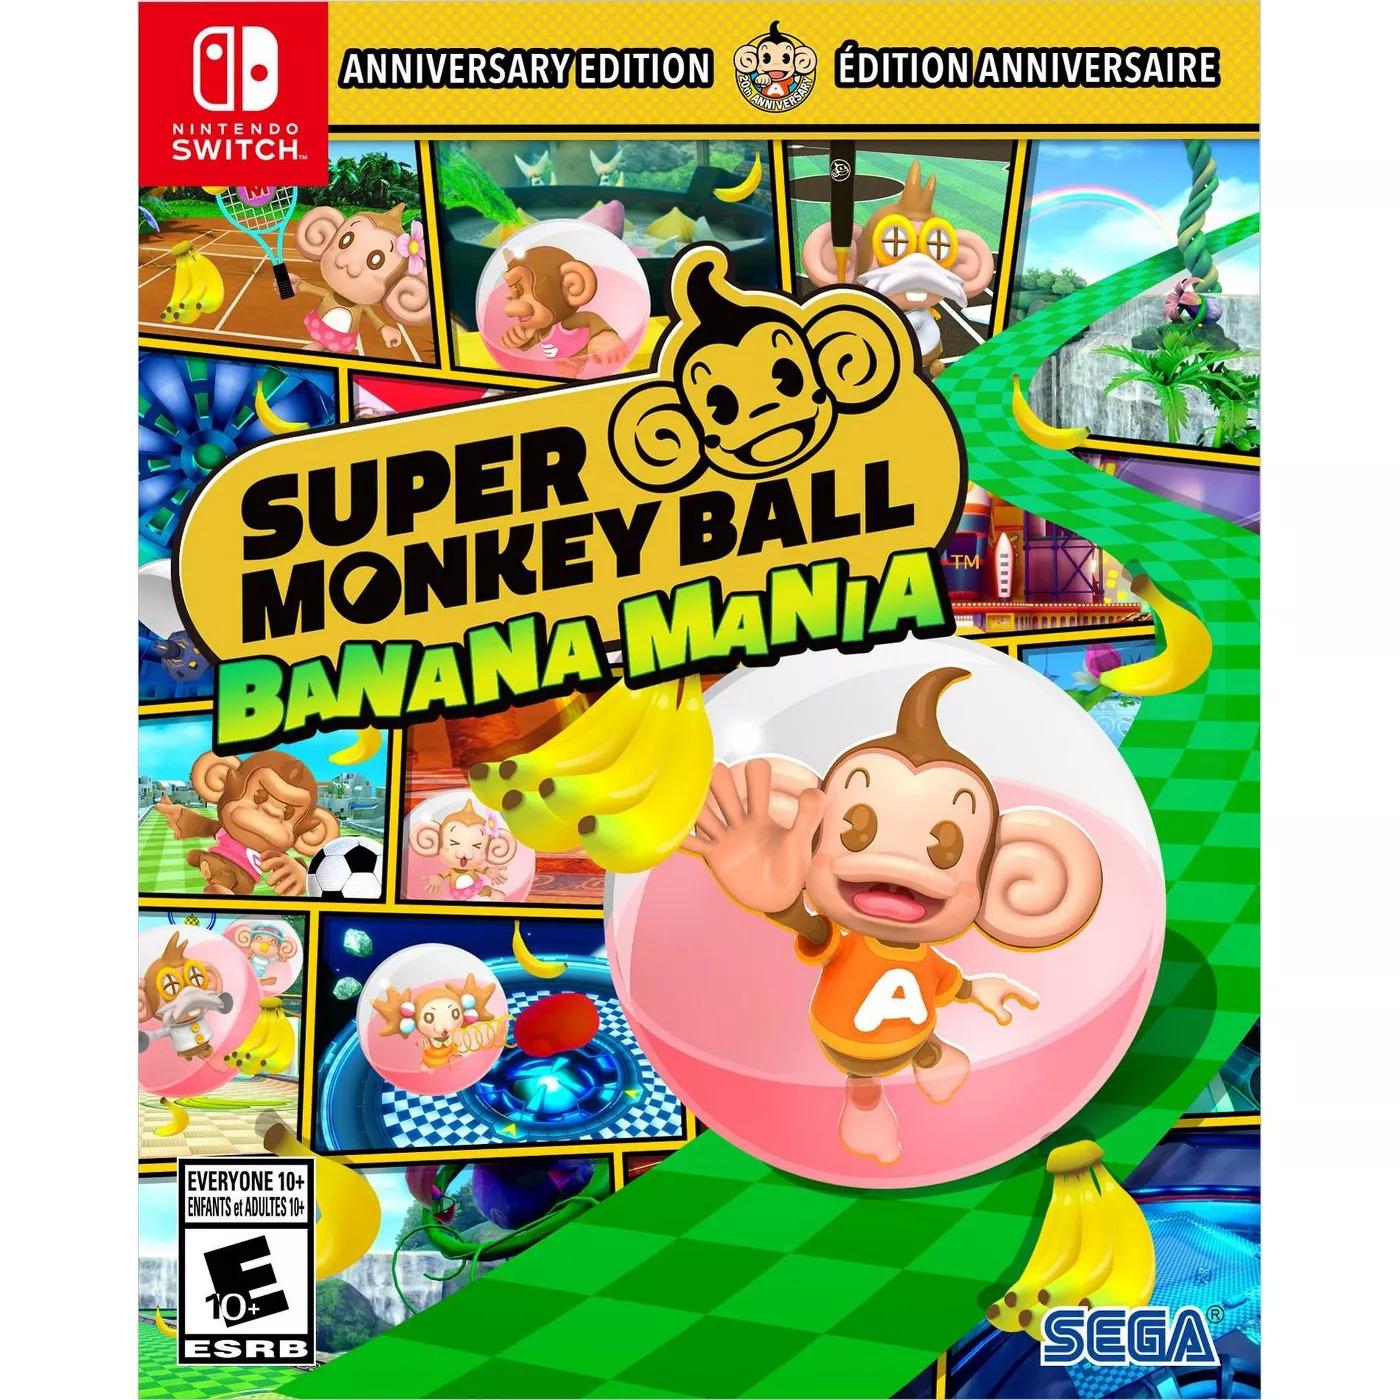 Super Monkey Ball Banana Mania Anniversary Launch Edition Switch for $19.99